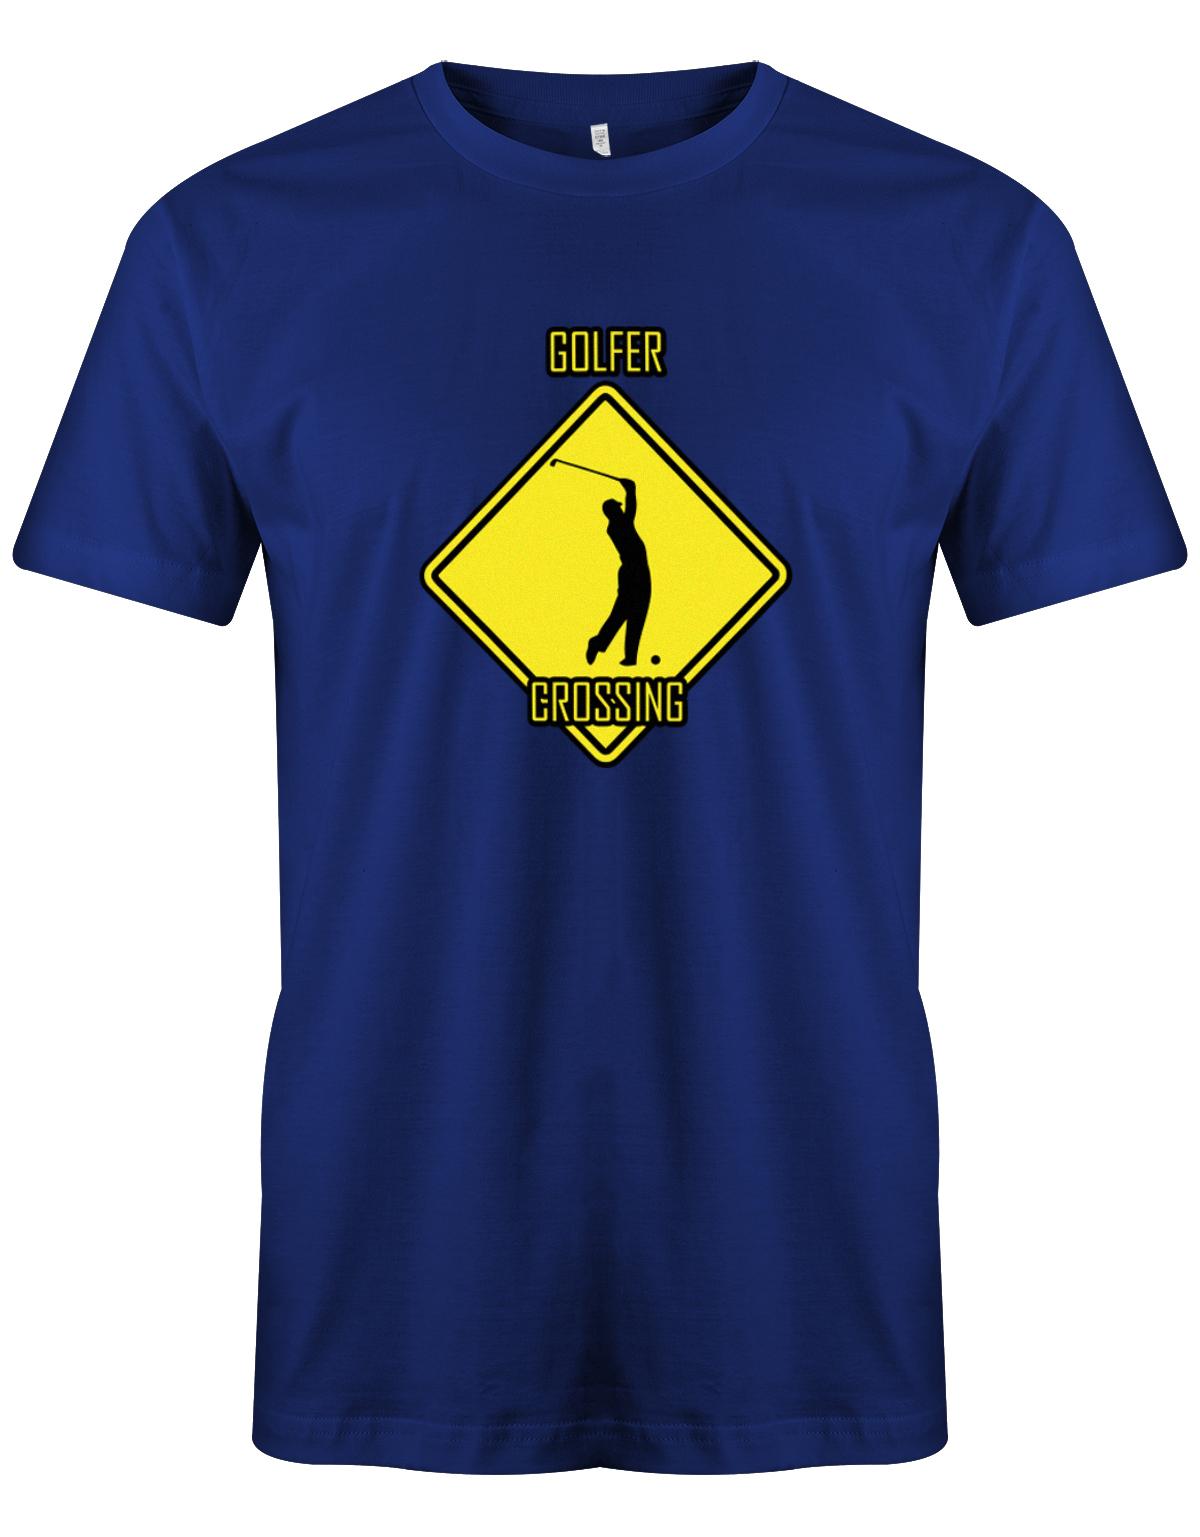 Golfer-Crossing-Herren-Shirt-Royalblau